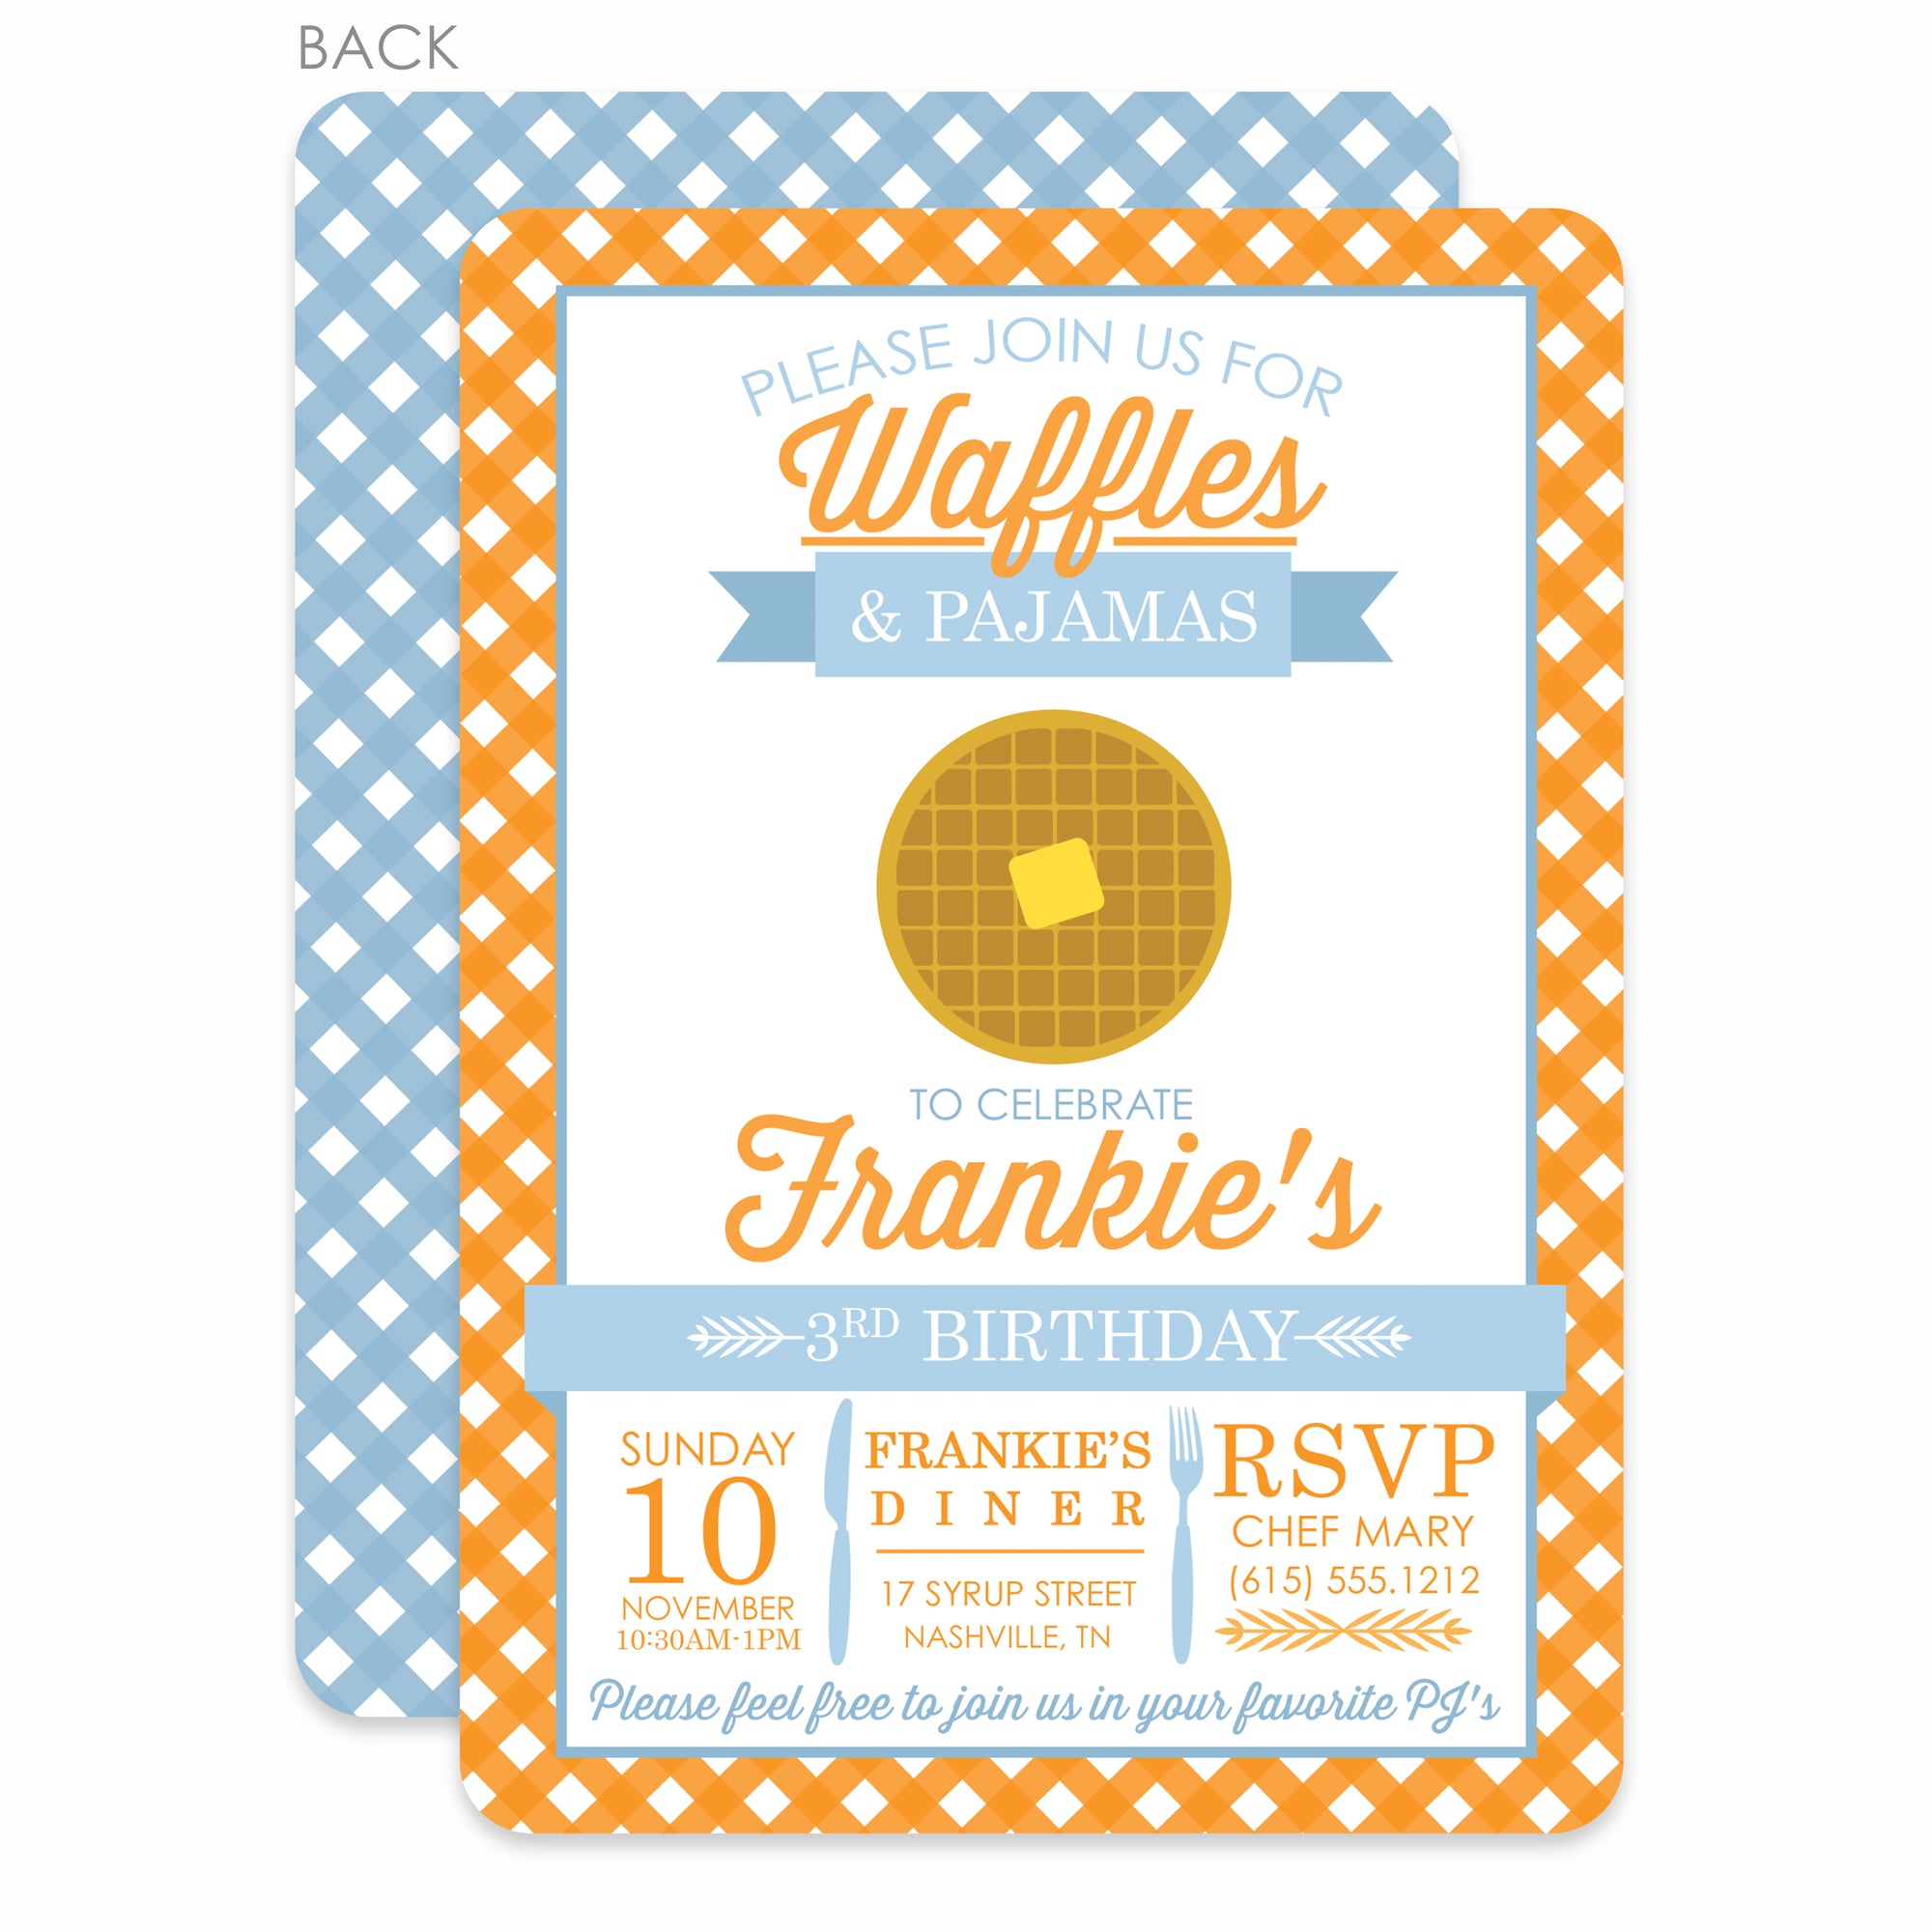 Waffles and Pajamas Invitation | Pipsy.com | Blue & Orange, printed on thick cardstock